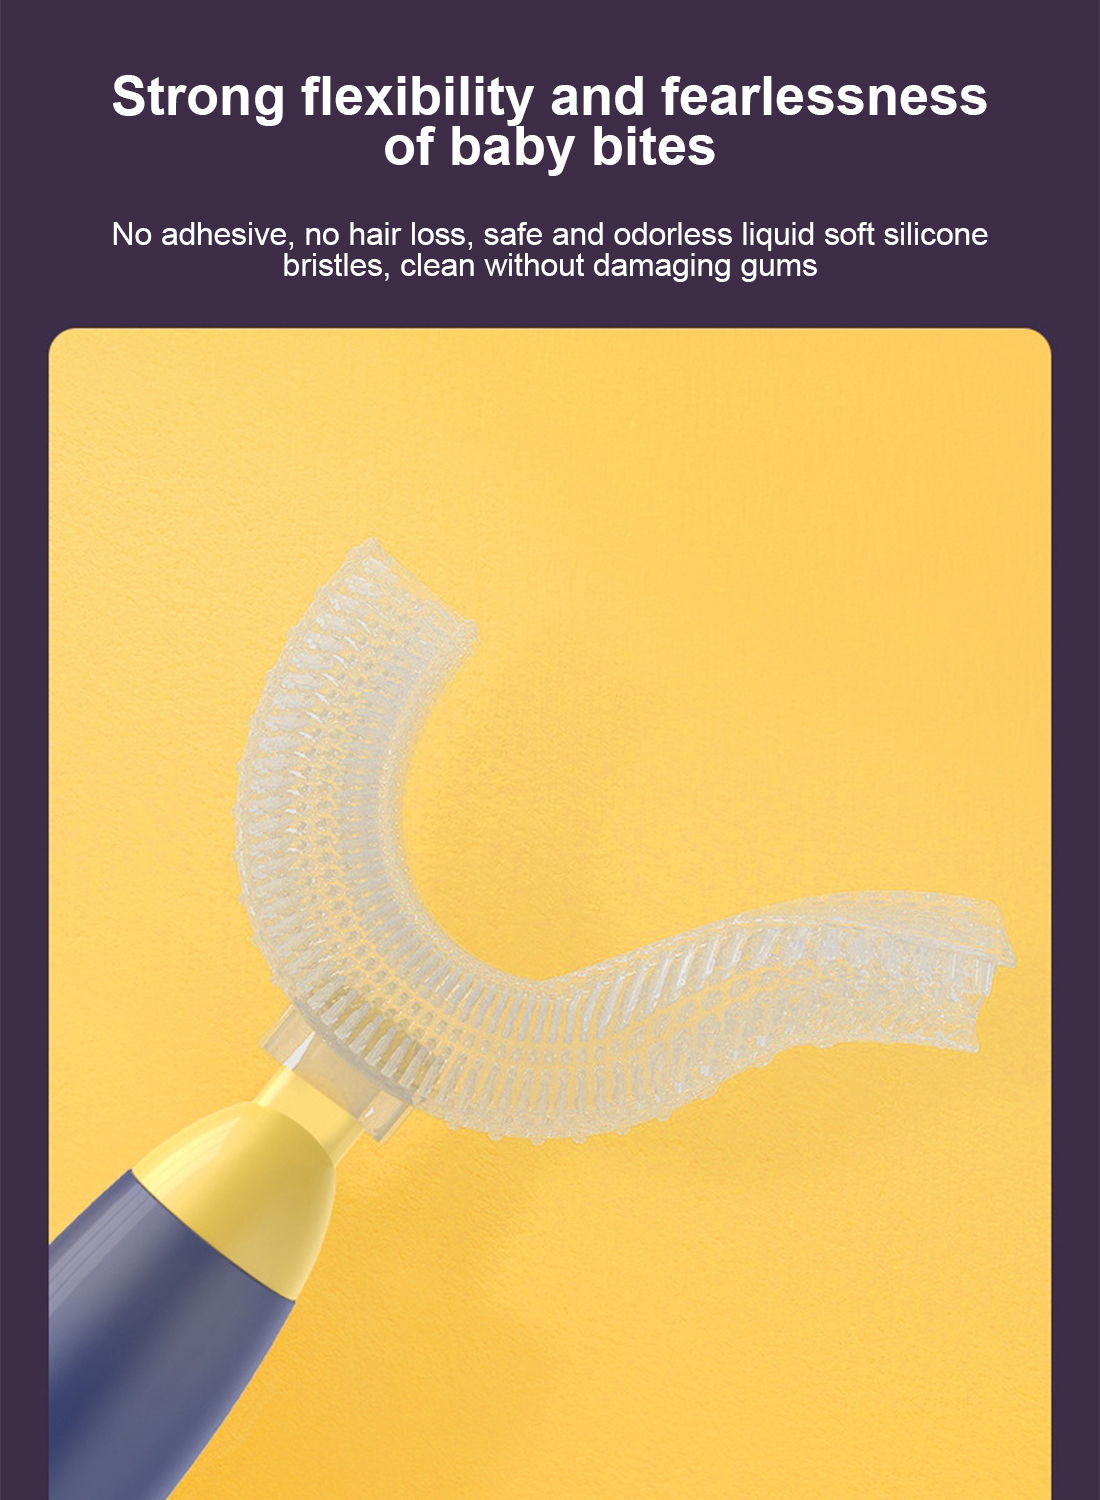 Children's U-Shaped Rocket Toothbrush